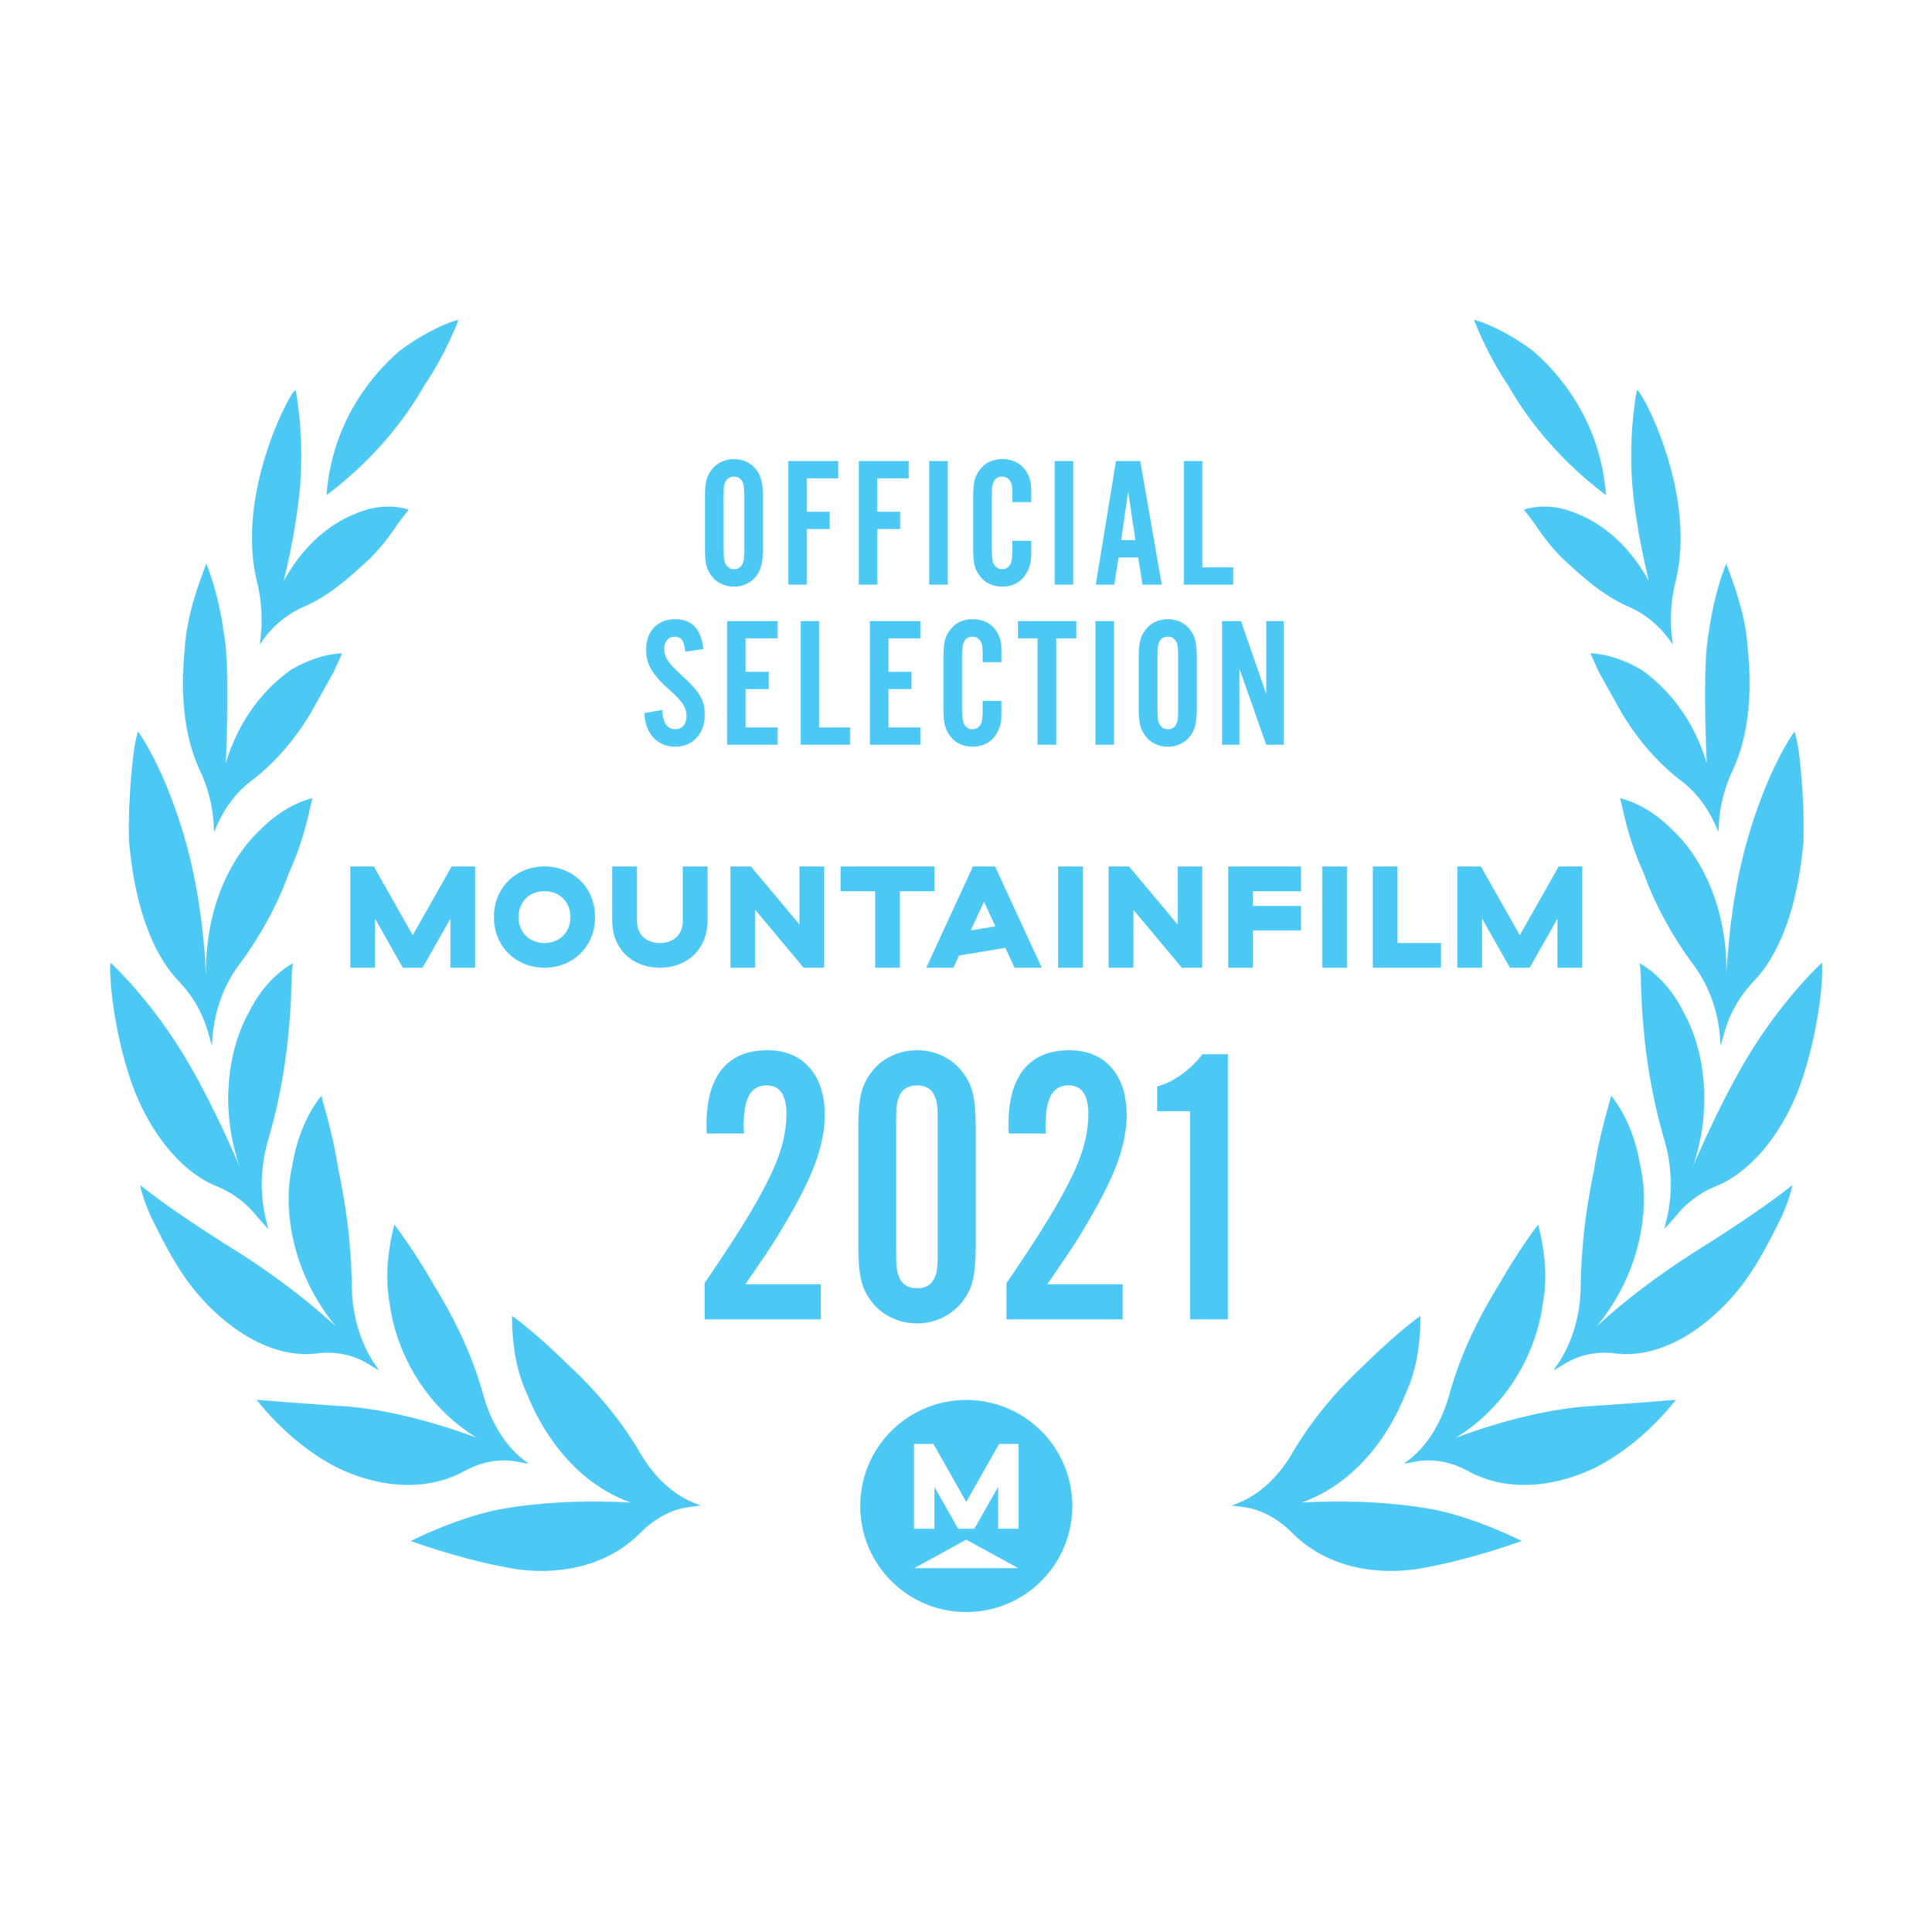 Mountainfilm2021-OfficialSelection-Blue.png